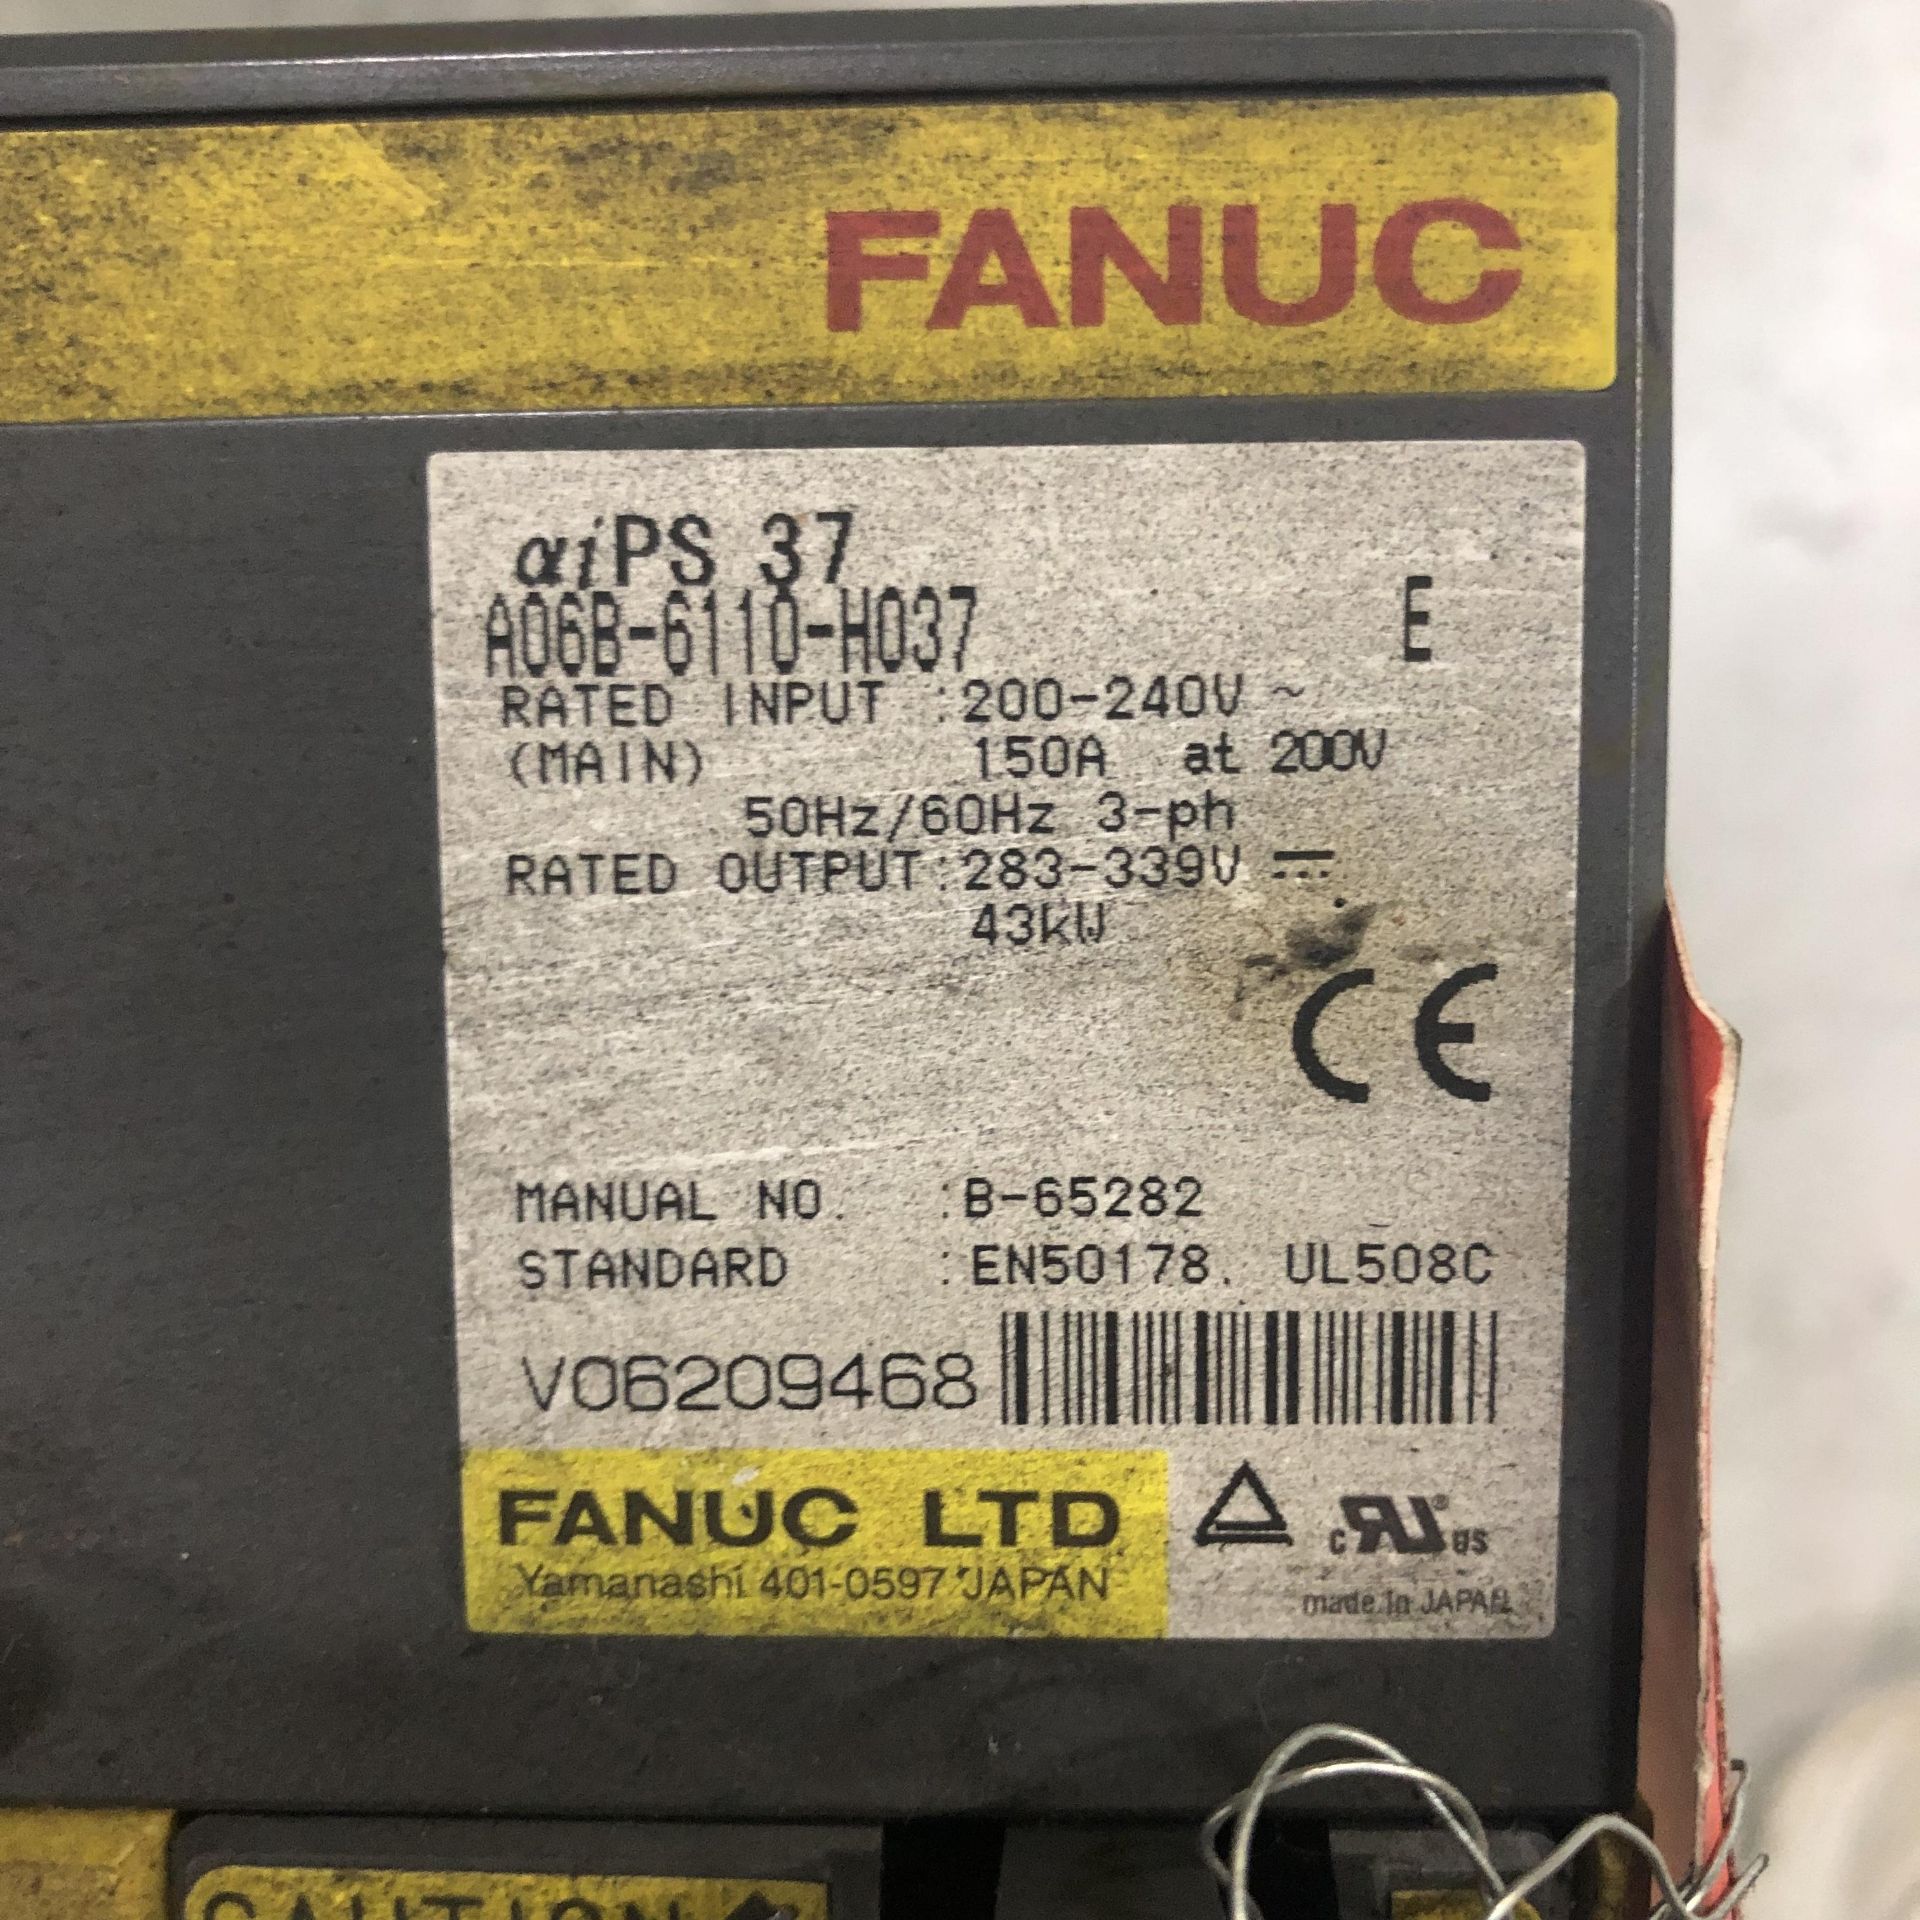 Fanuc Servo Amplifier Module, A06B-6110-H037, aiPS 37 - Image 5 of 5